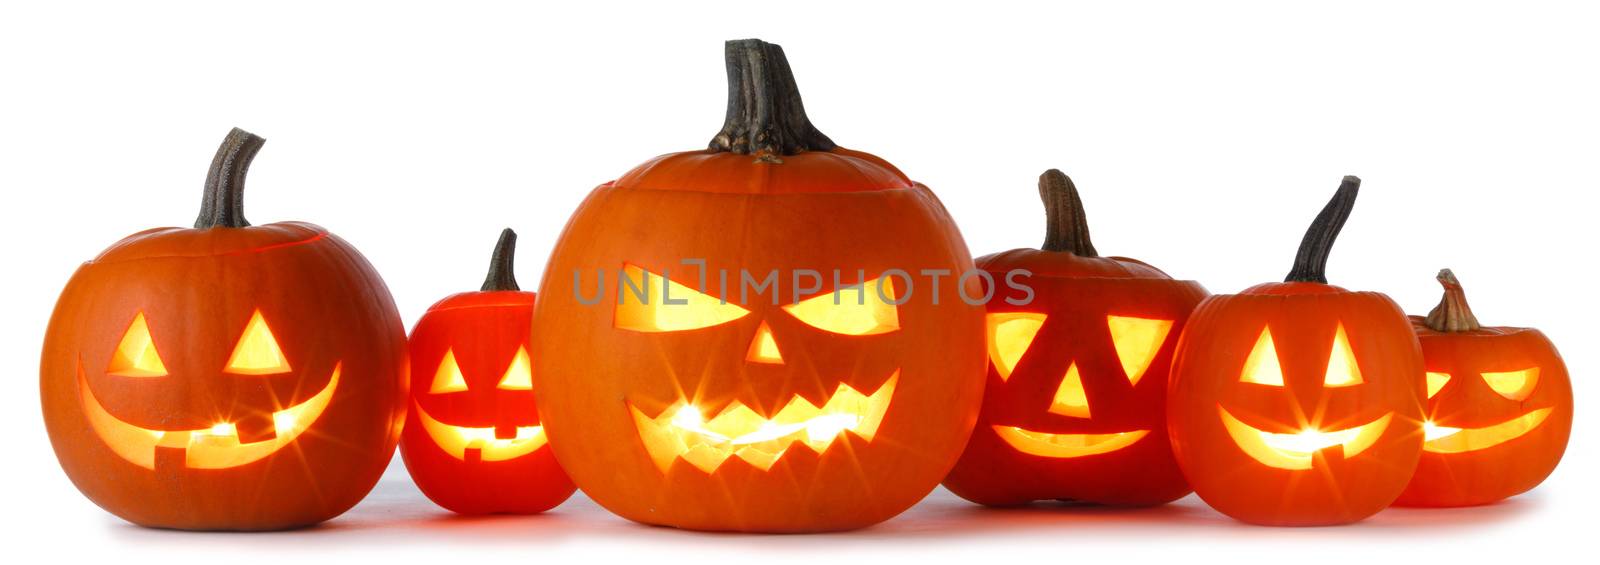 Halloween Pumpkins on white by Yellowj